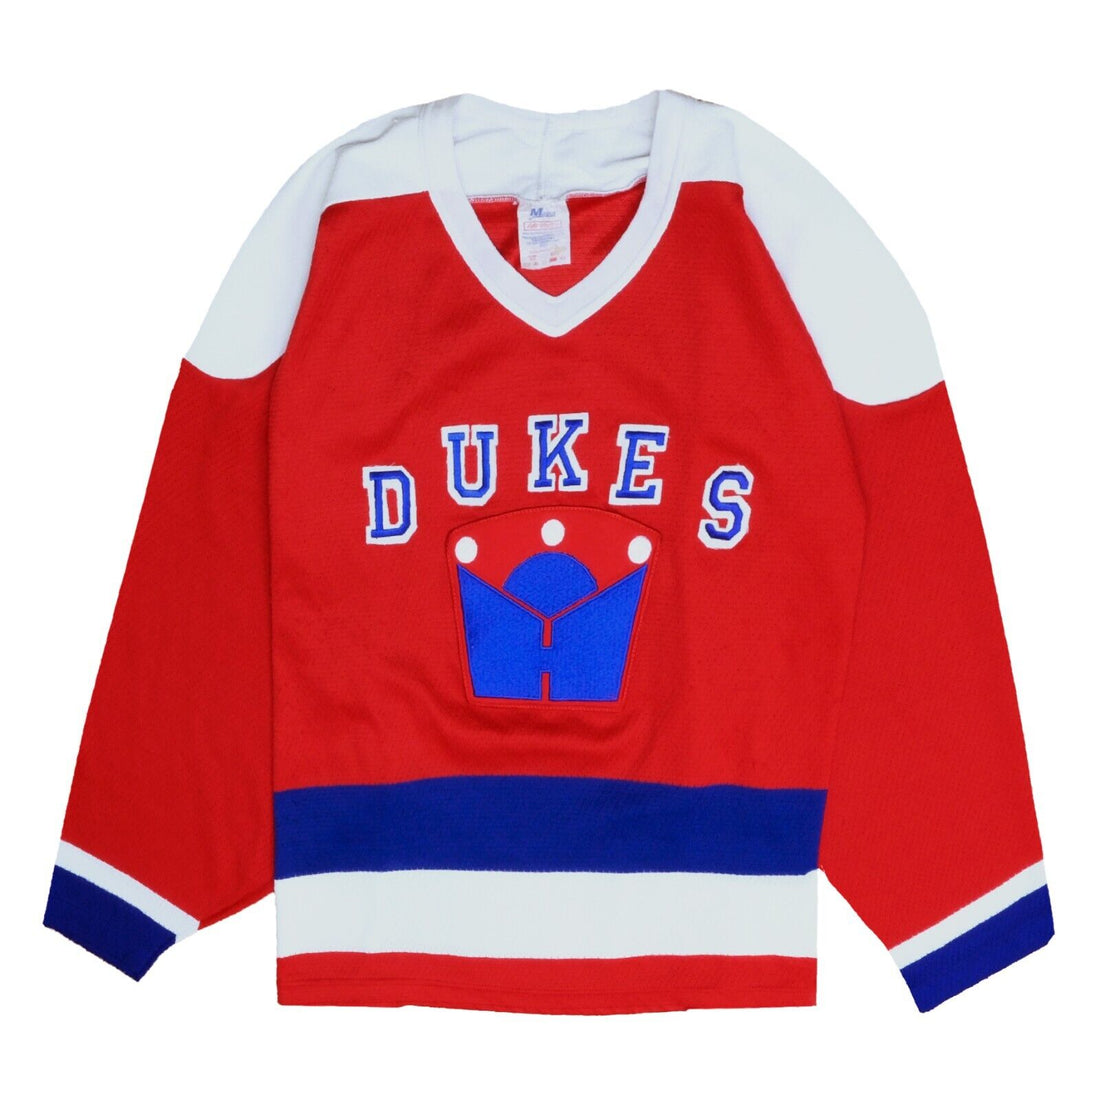 Nike Red Deer Rebels WHL CHL Hockey Jersey Adult S White Canada Sewn blank